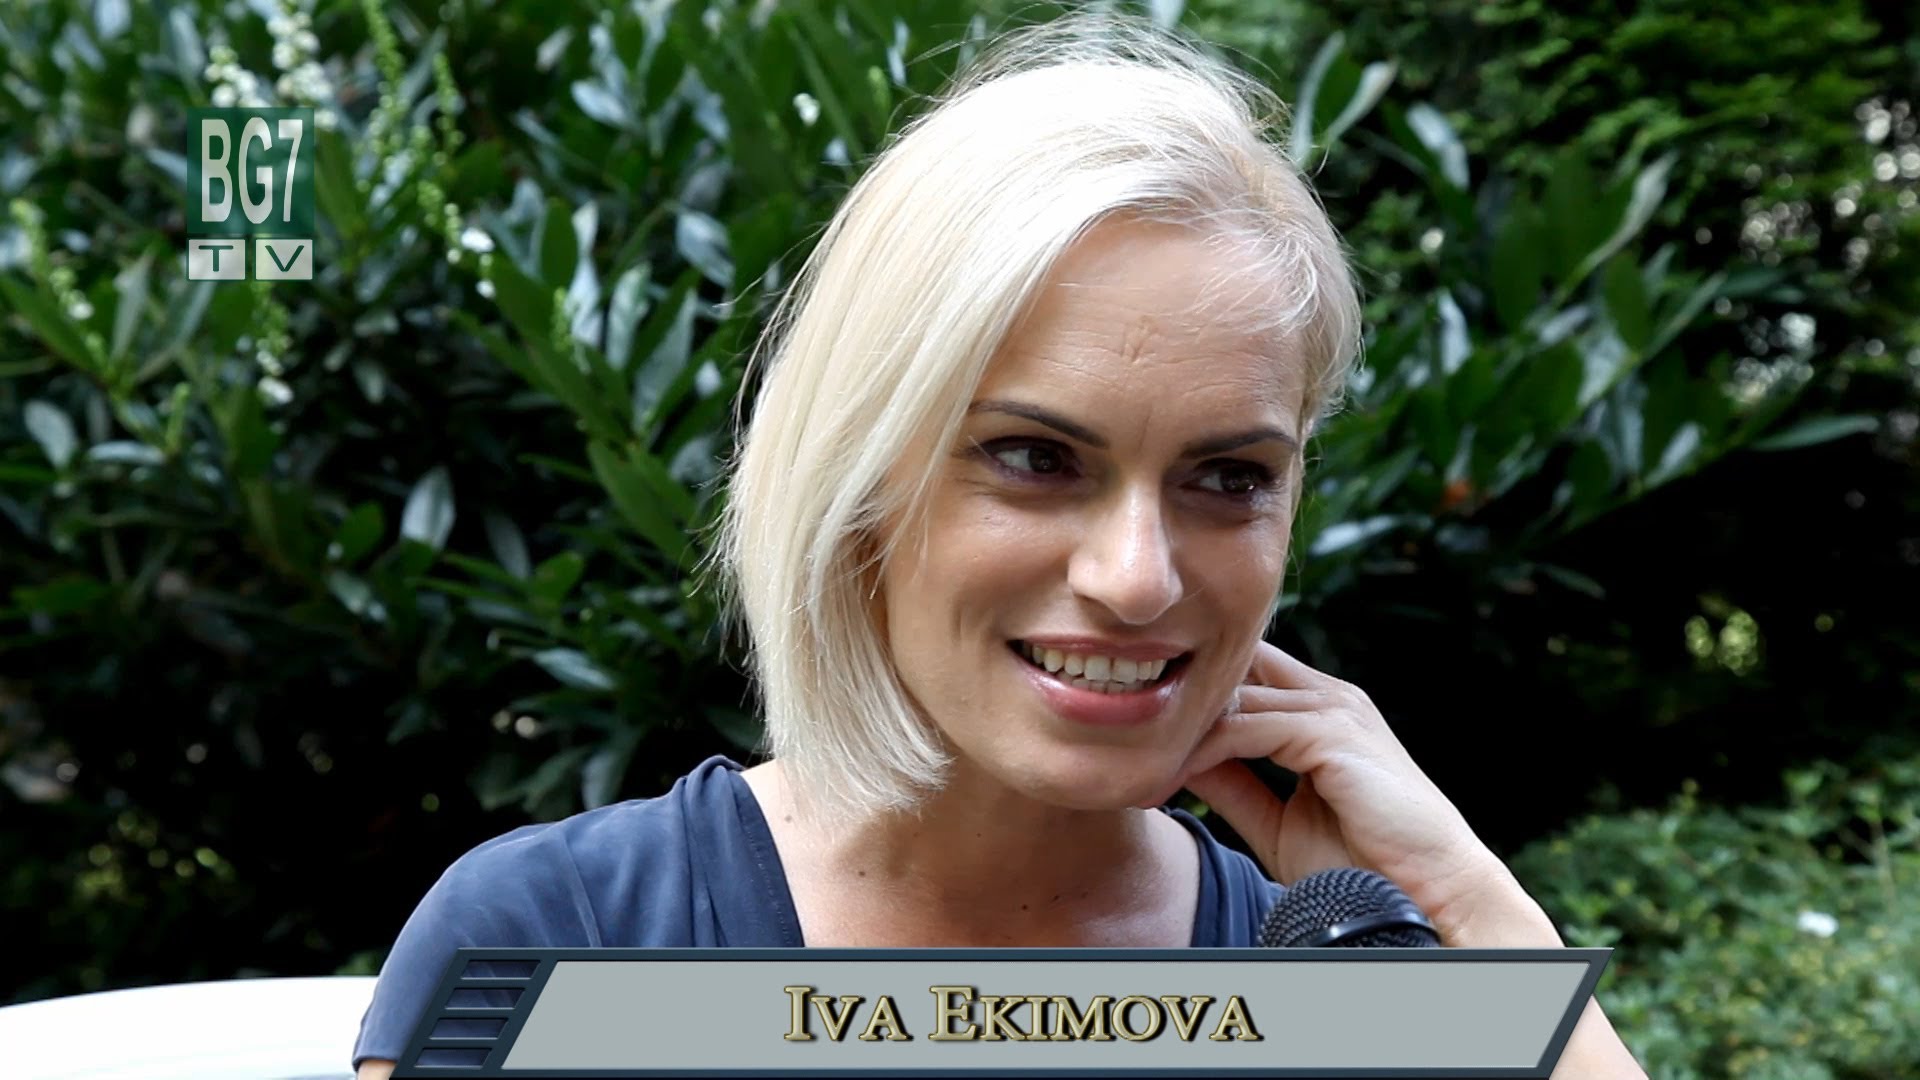 bg7 tv представя ива екимова - bulgarian pr expert